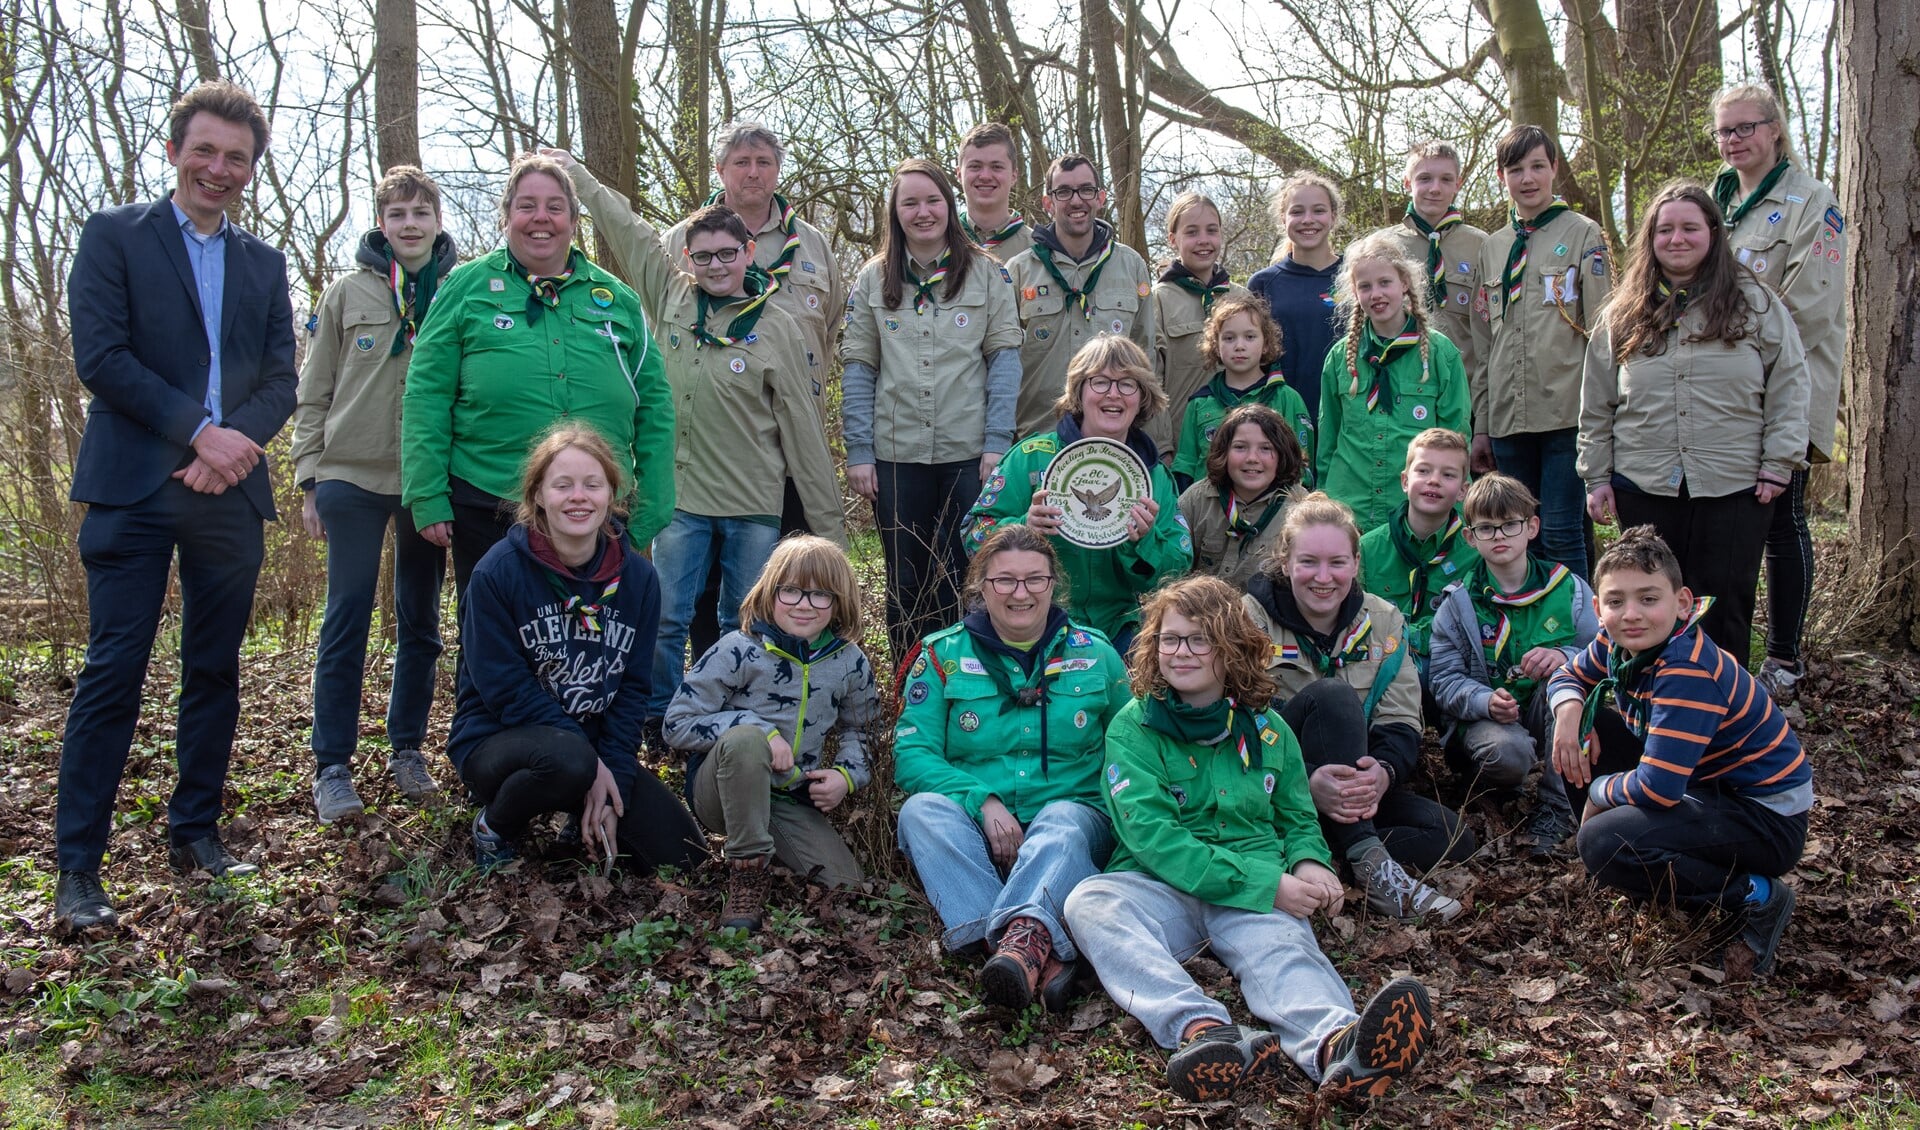 Scoutinggroep De Strandvogels is 80 jaar oud, maar nog vol levenslust. (Foto: Jos Uijtdehaage).